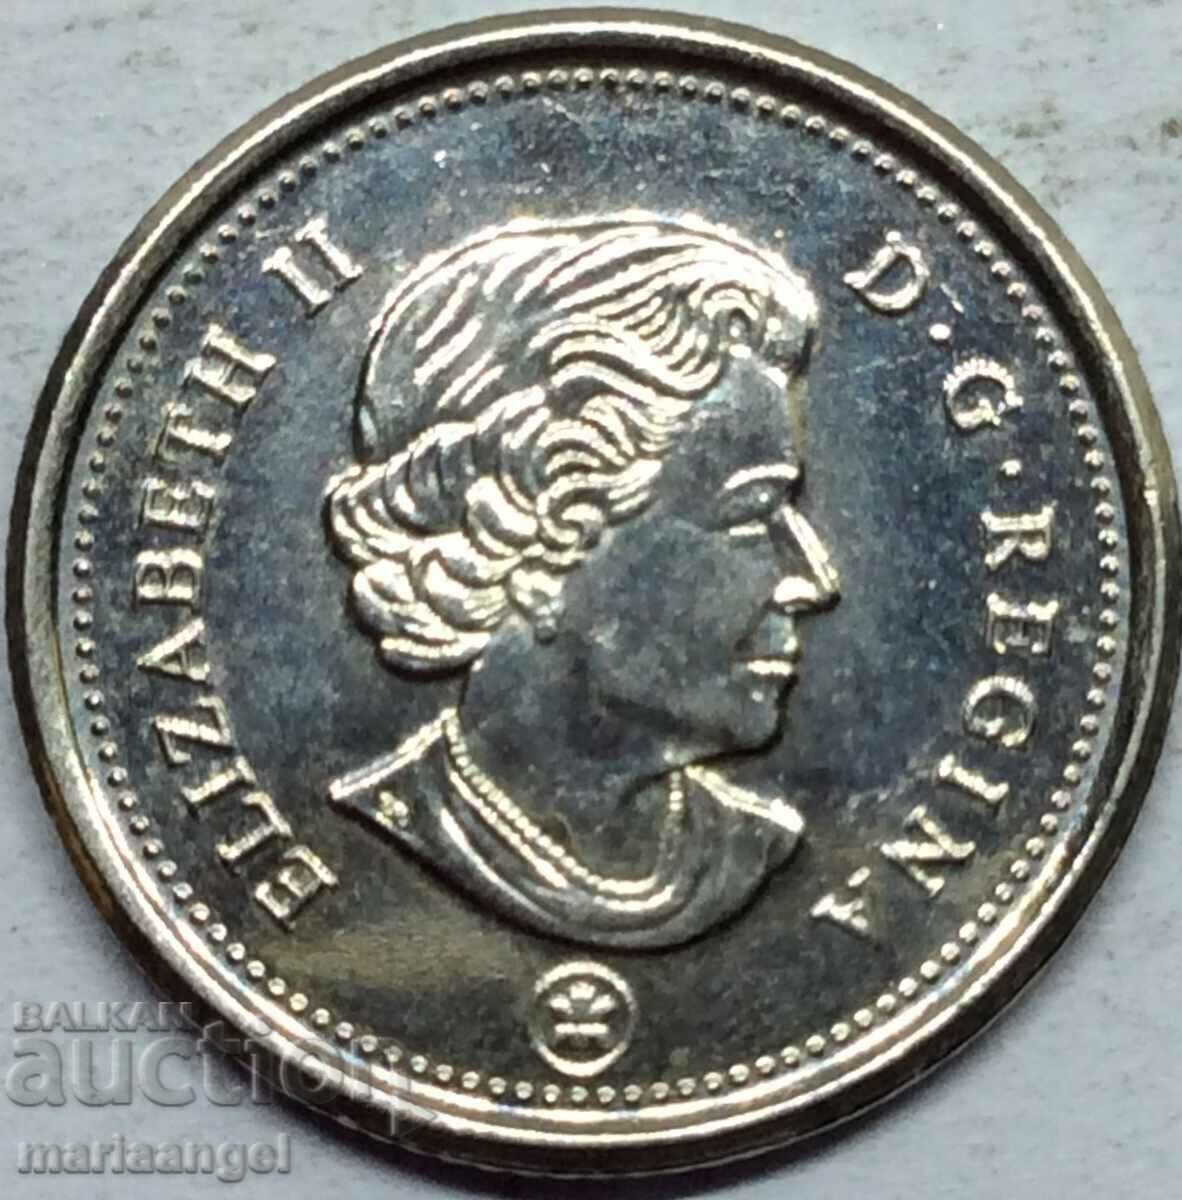 Canada 2015 10 cents Elizabeth II